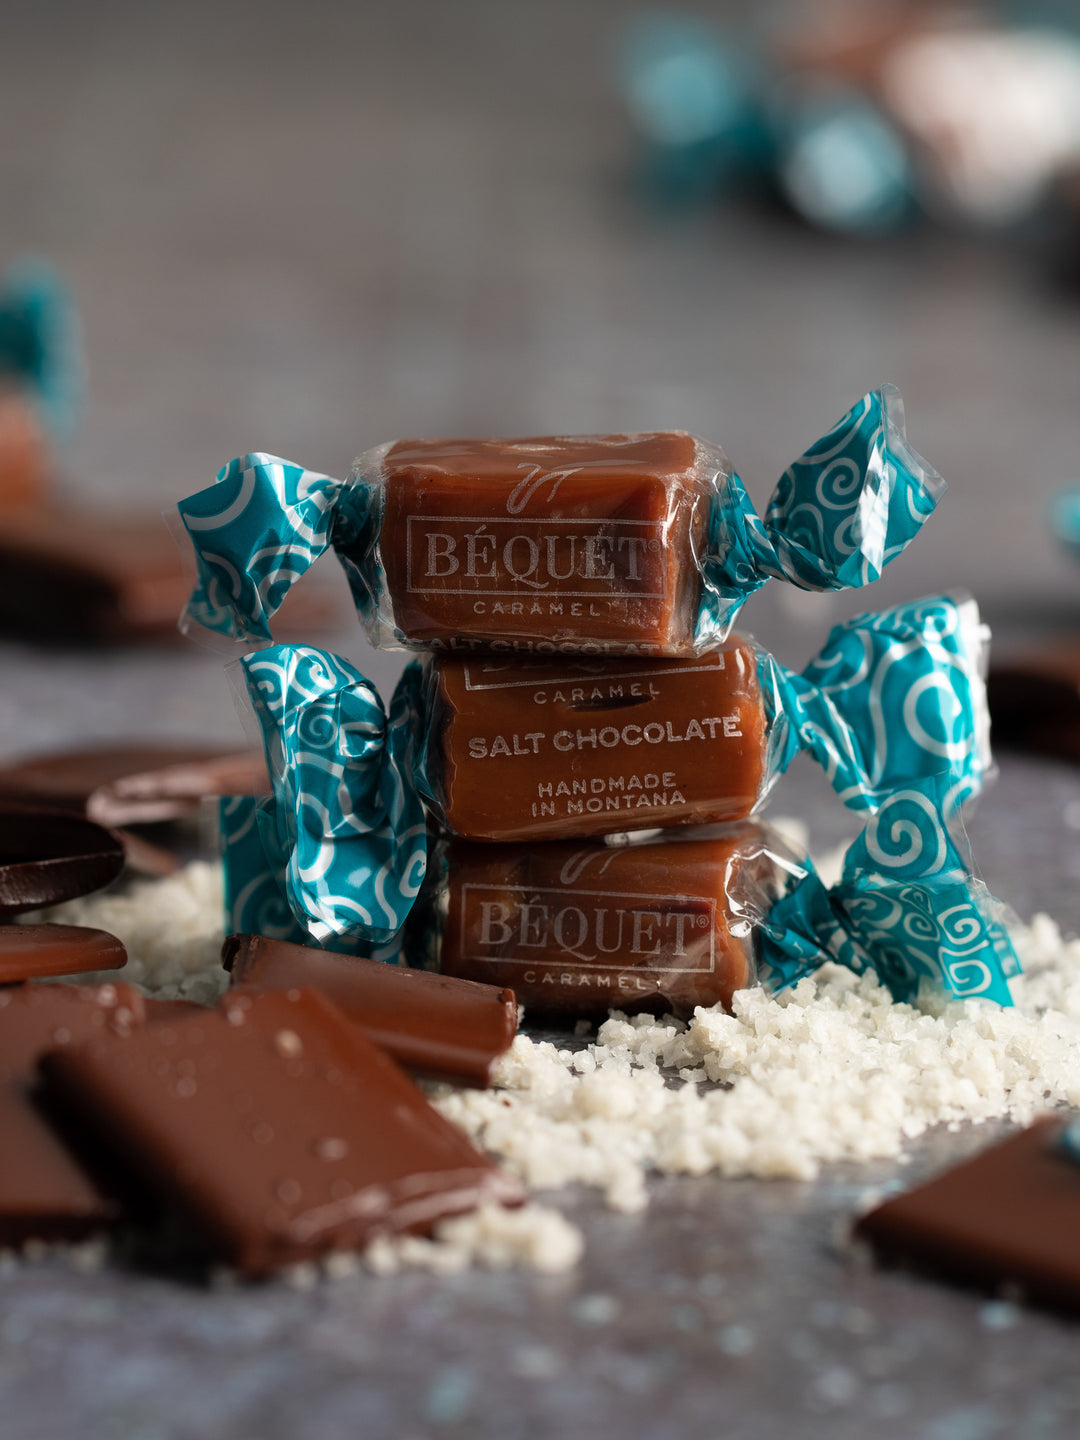 classic bequet caramel#caramel-variety_salt-chocolate